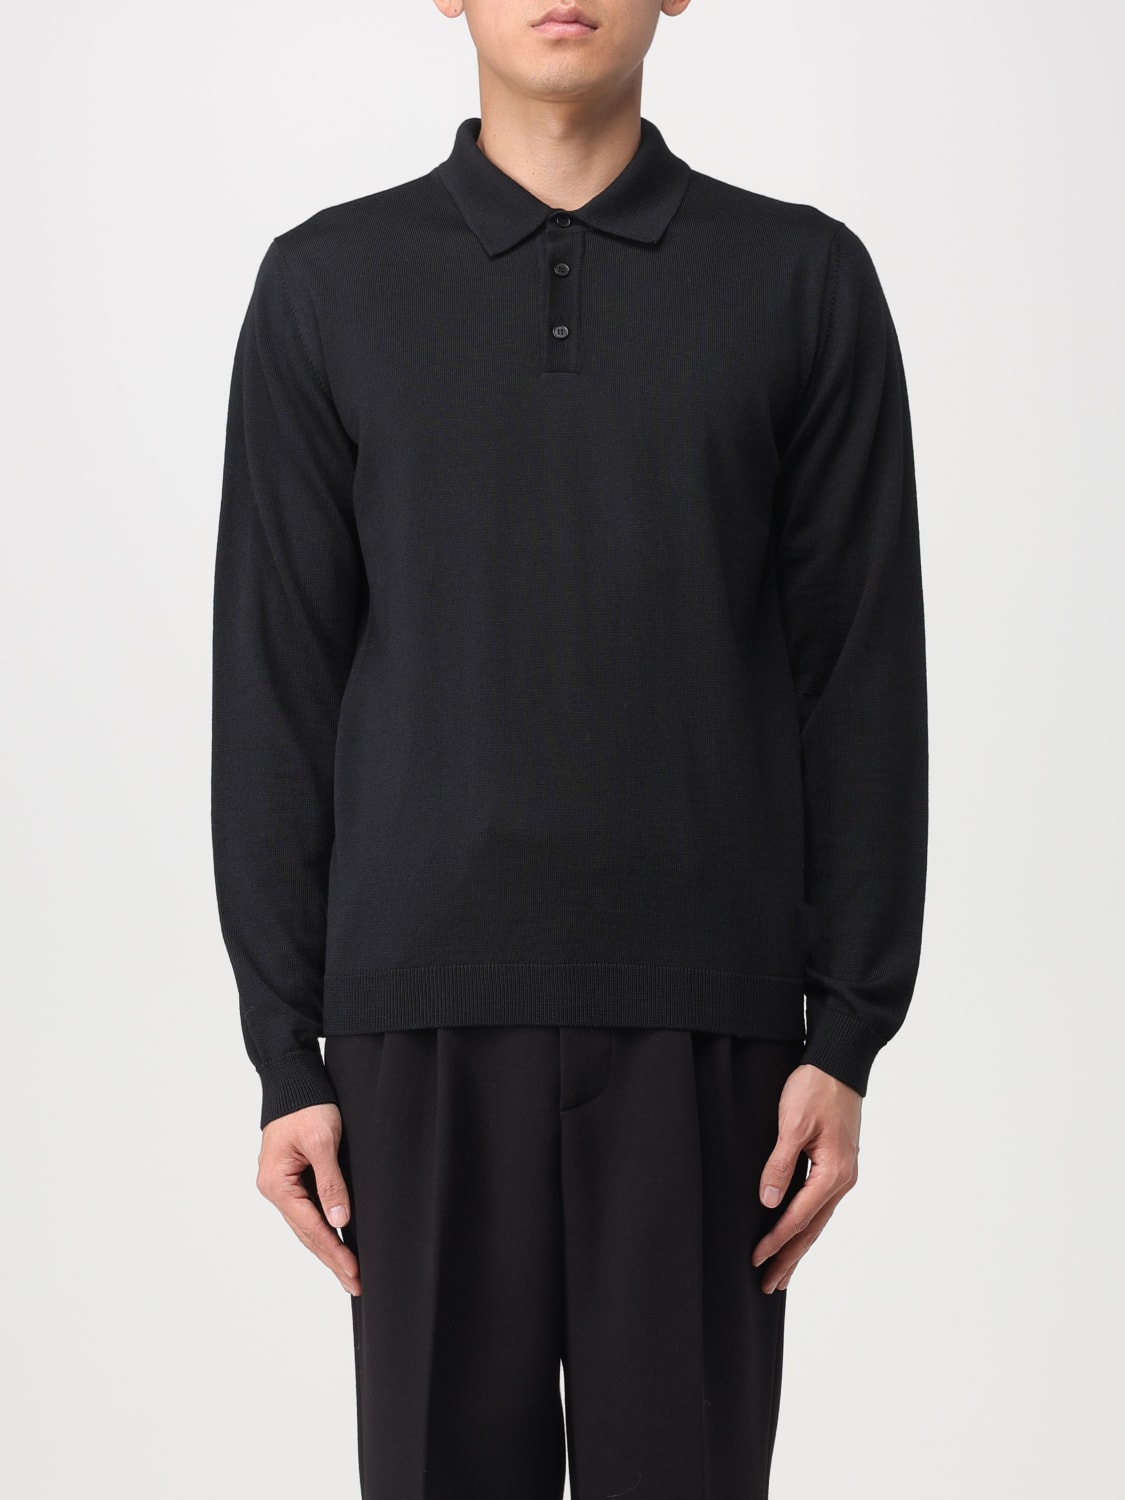 ROBERTO COLLINA: Sweater men - Black | ROBERTO COLLINA sweater RP01004 ...